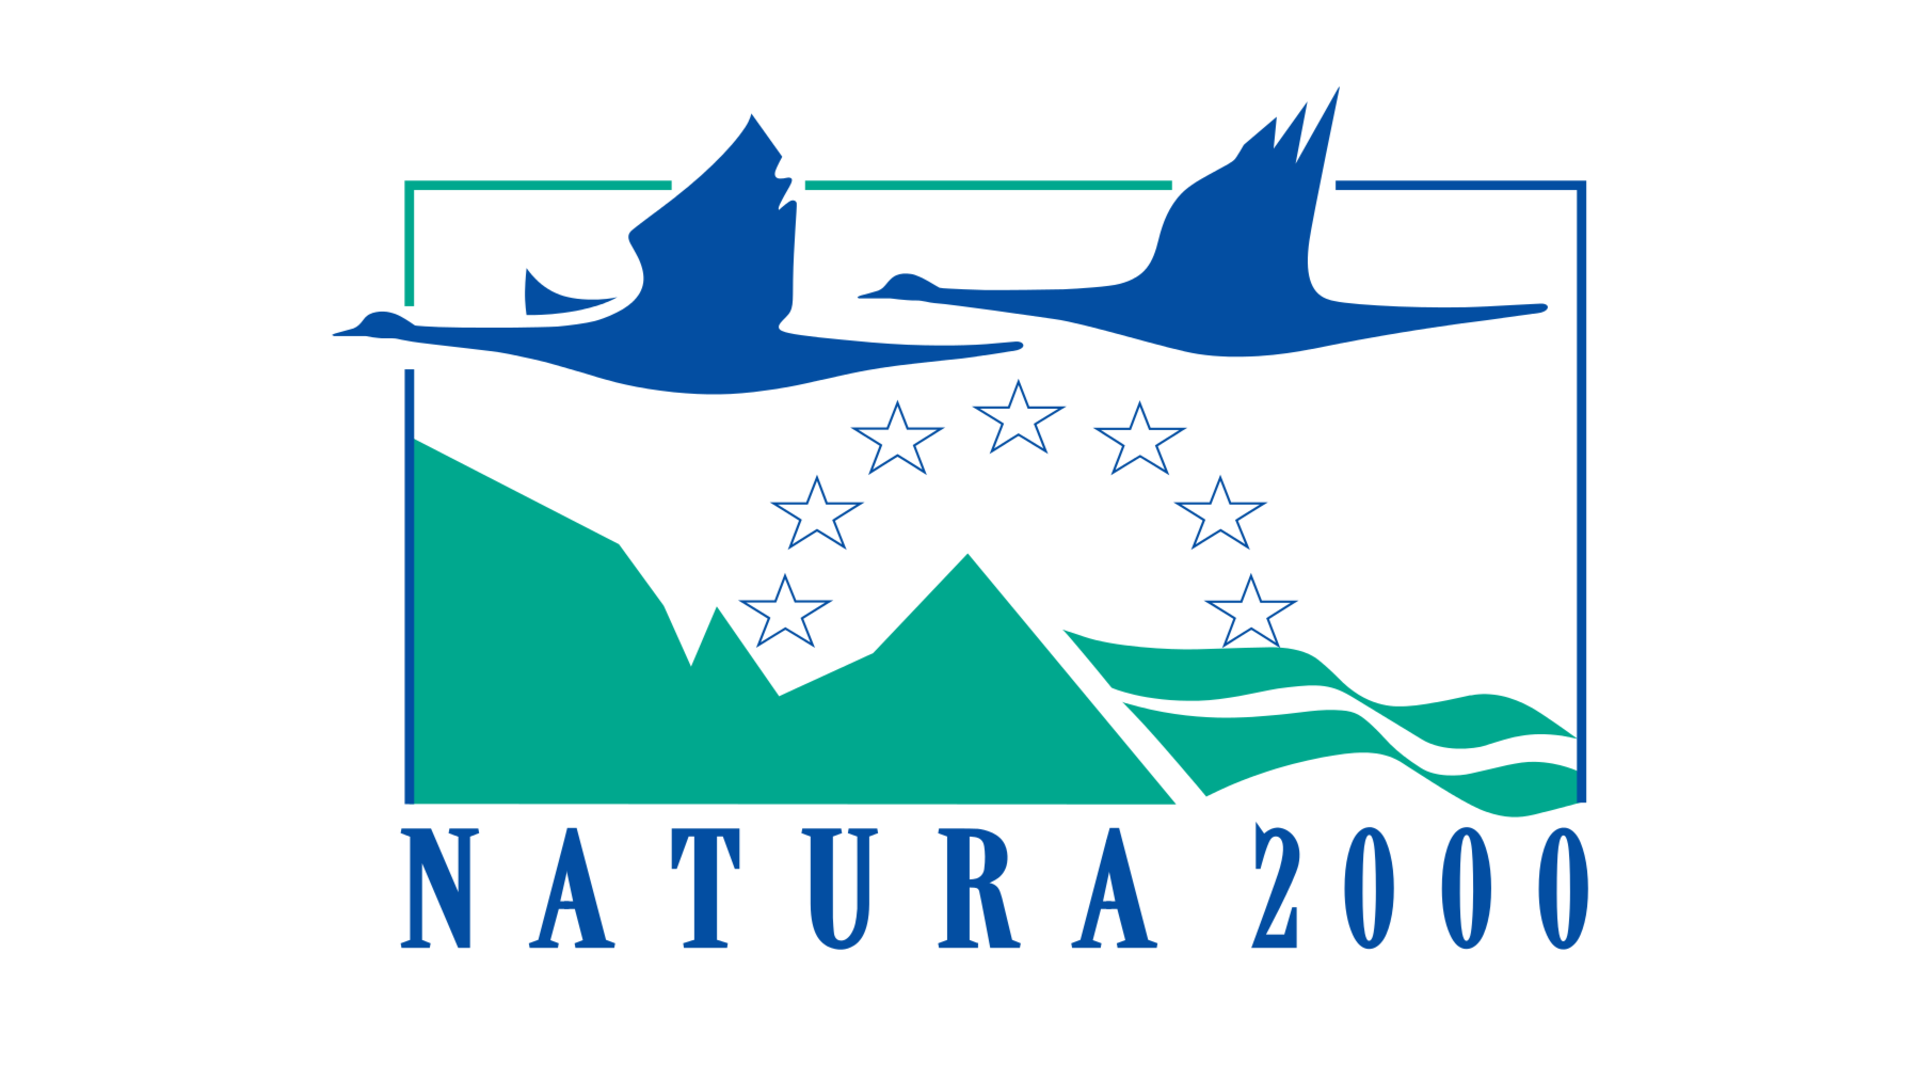 More information about "Σε διαβούλευση οι Ειδικές Περιβαλλοντικές Μελέτες (ΕΠΜ), αναφορικά με τις προστατευόμενες περιοχές «Natura 2000», της Περιφέρειας Αττικής και τμήματος της Περιφέρειας Κρήτης (Δυτική Κρήτη)"